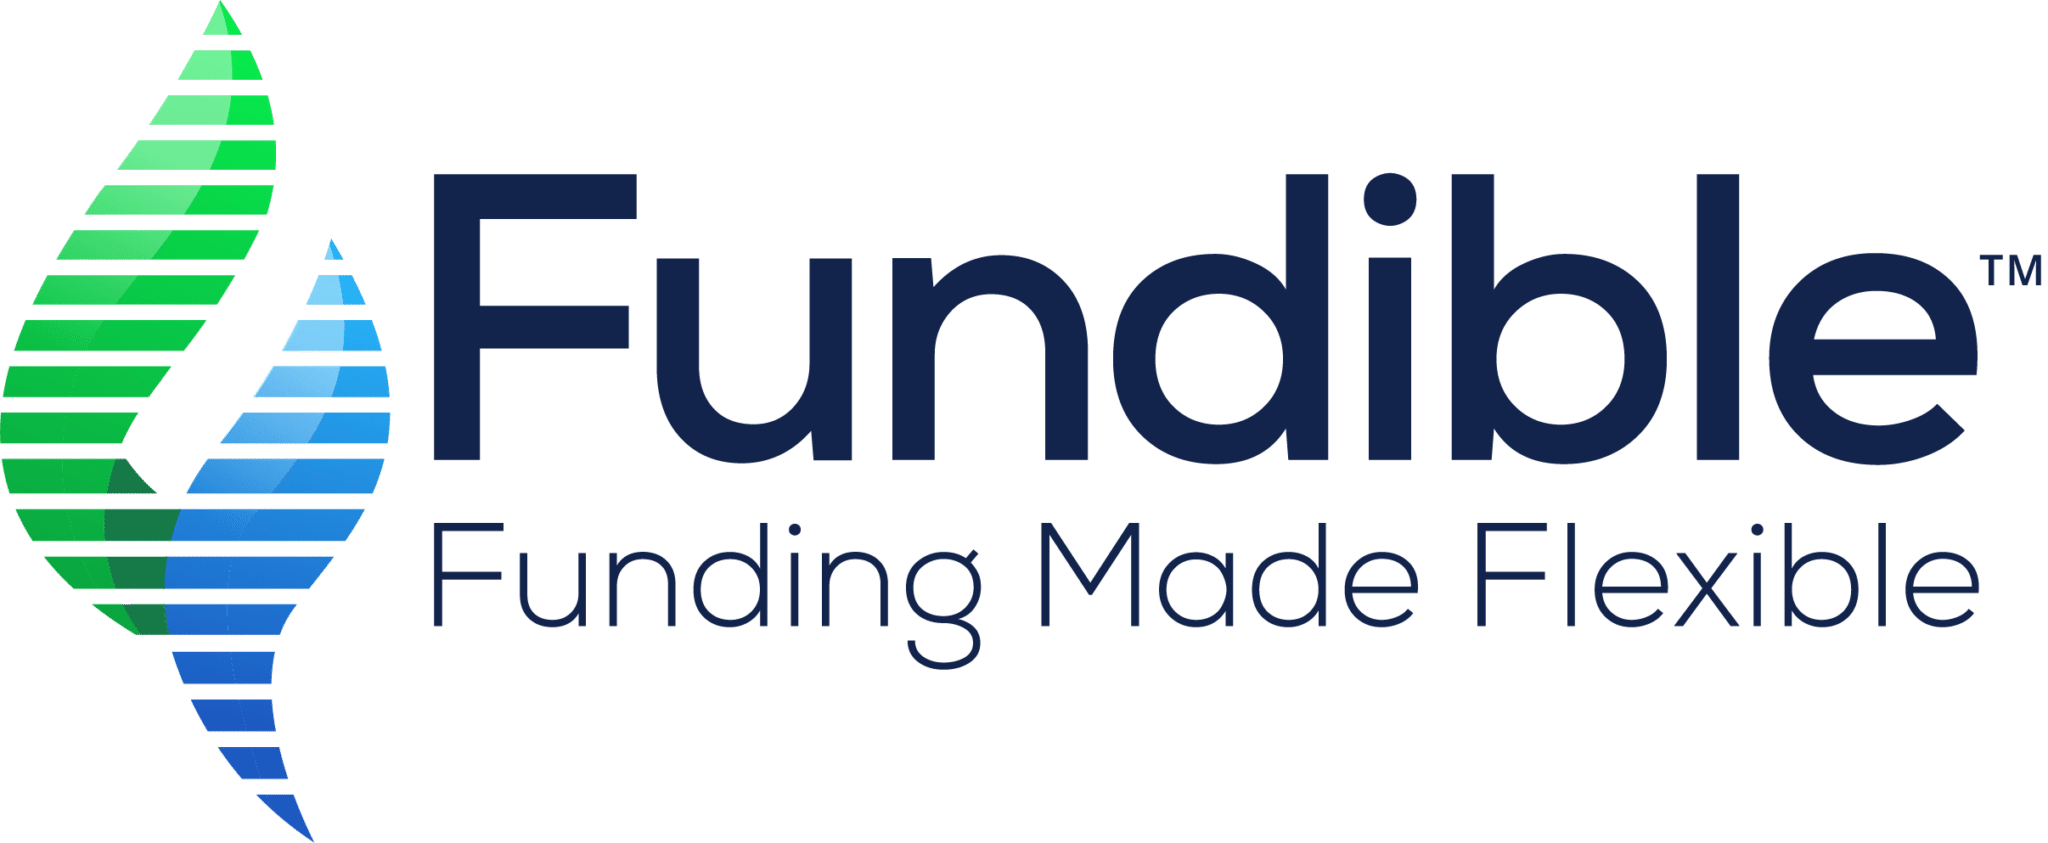 Fundible logo